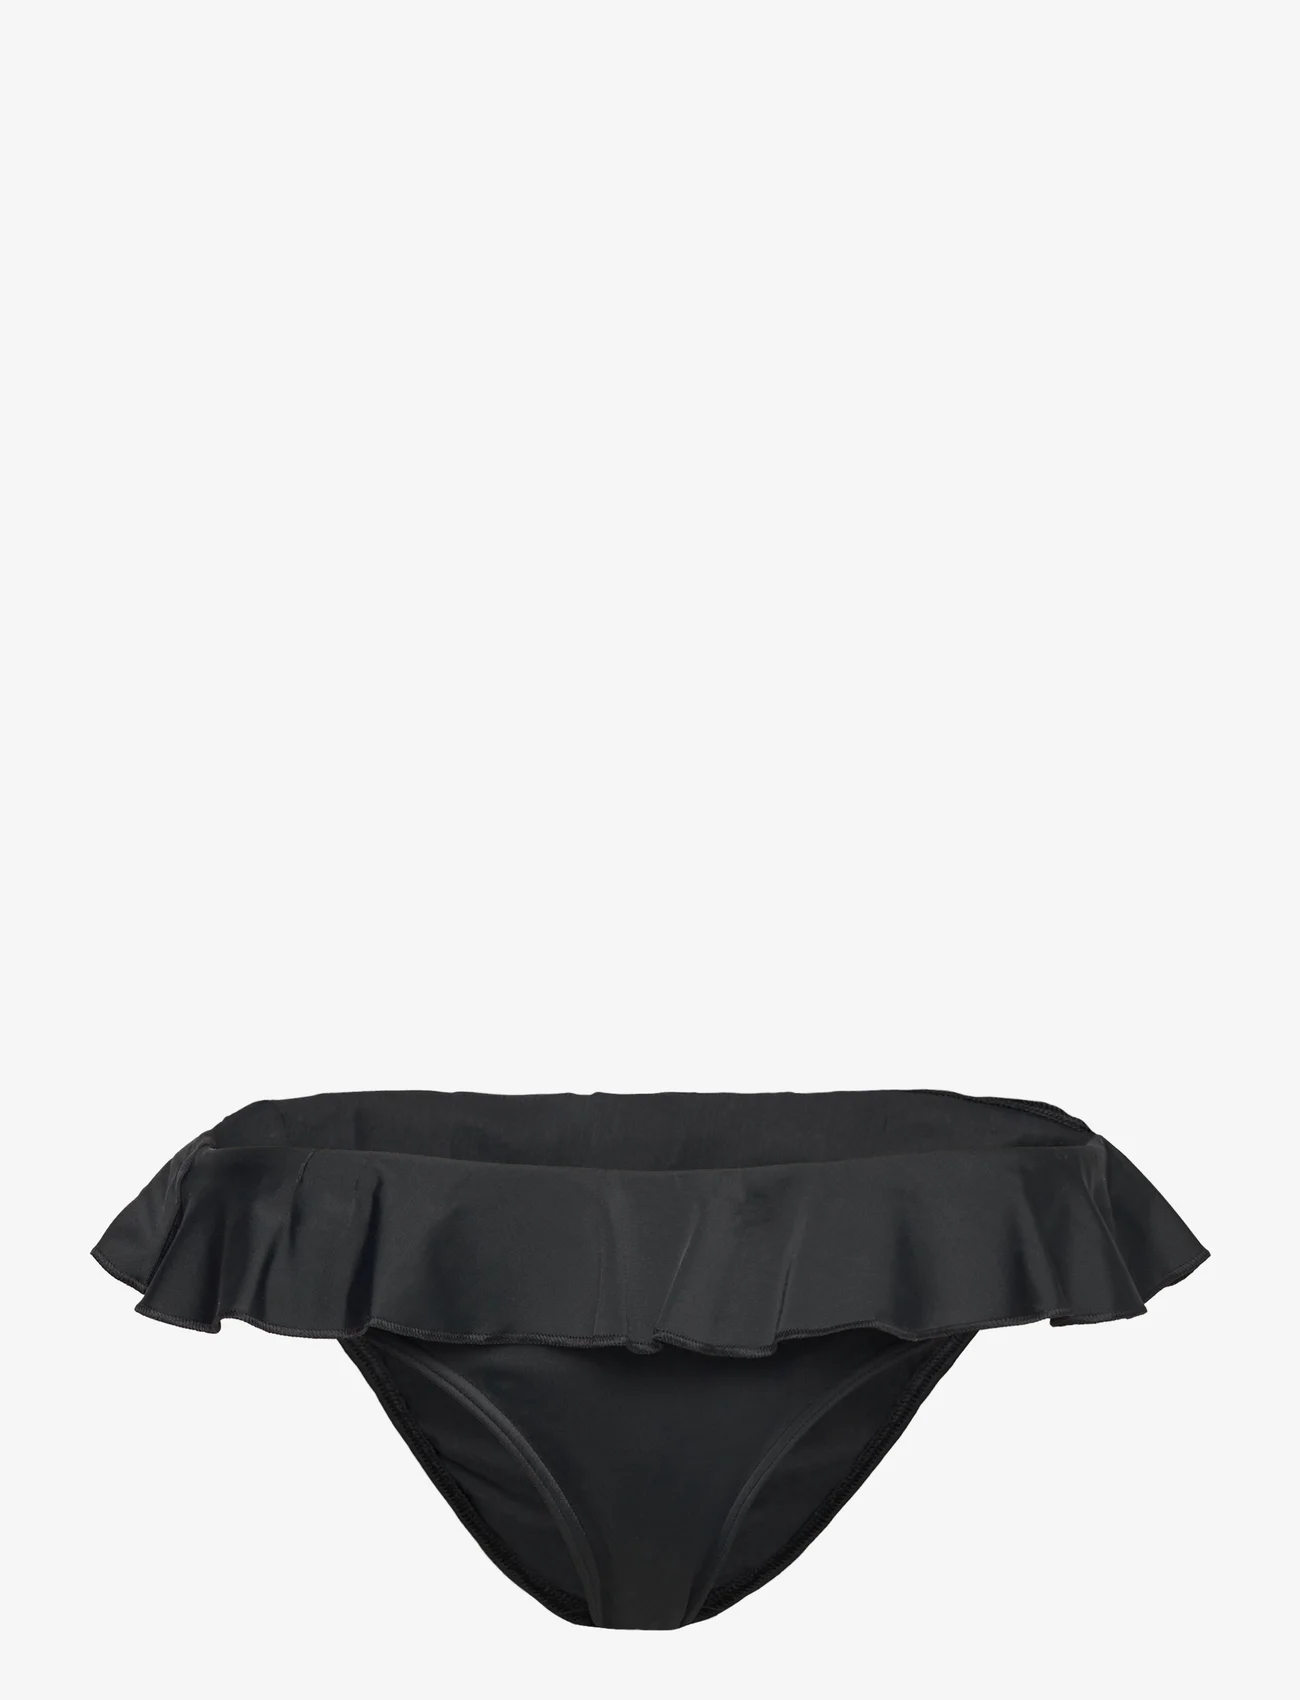 Freya - JEWEL COVE ITALINI BIKINI BRIEF L - bikini-slips - plain black - 0